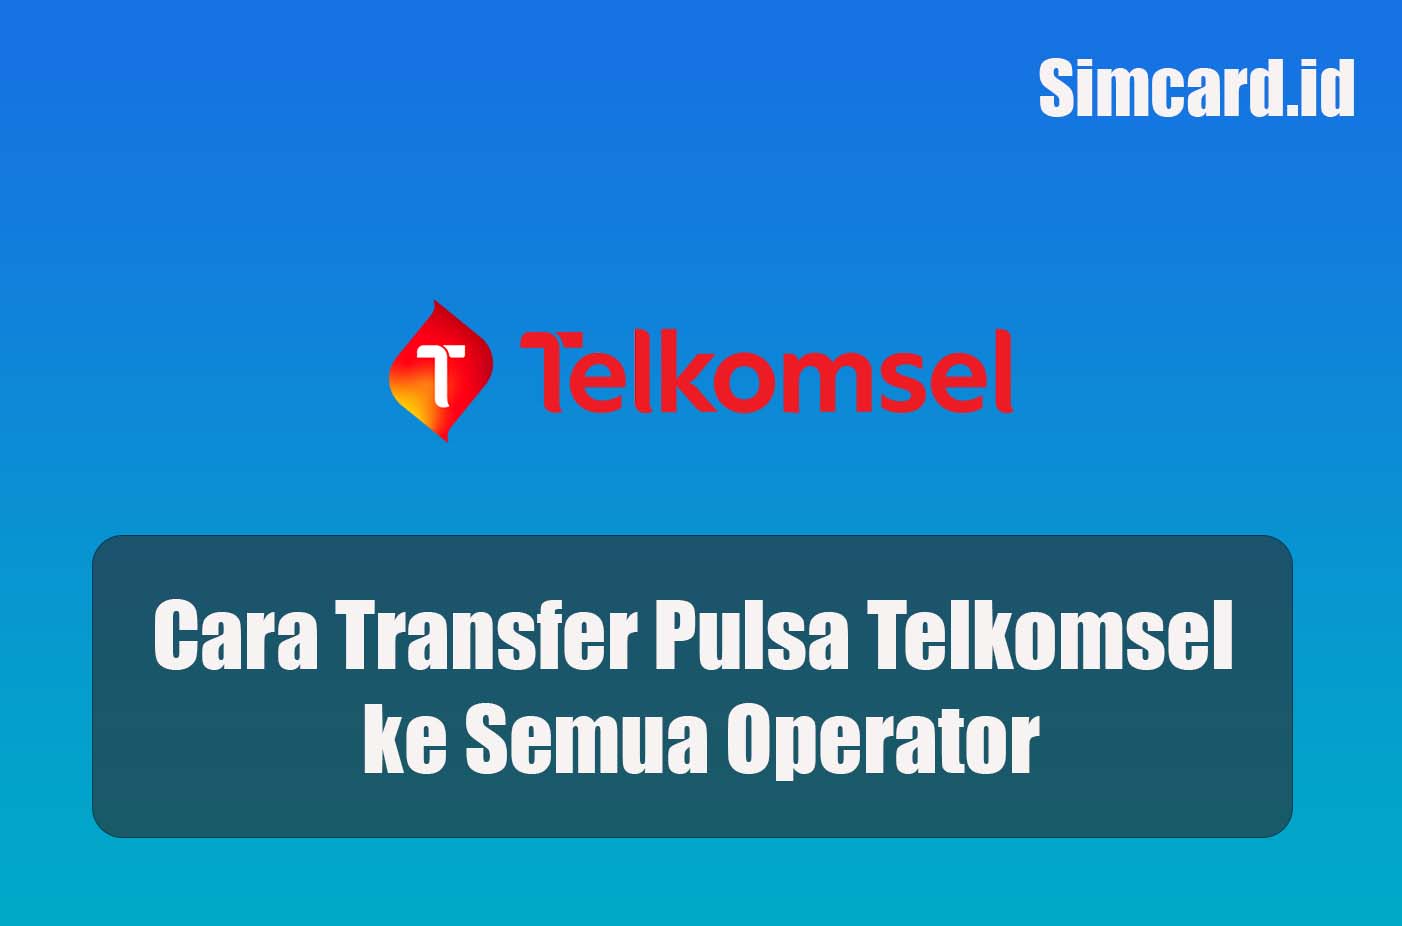 Cara Transfer Pulsa Telkomsel ke Semua Operator